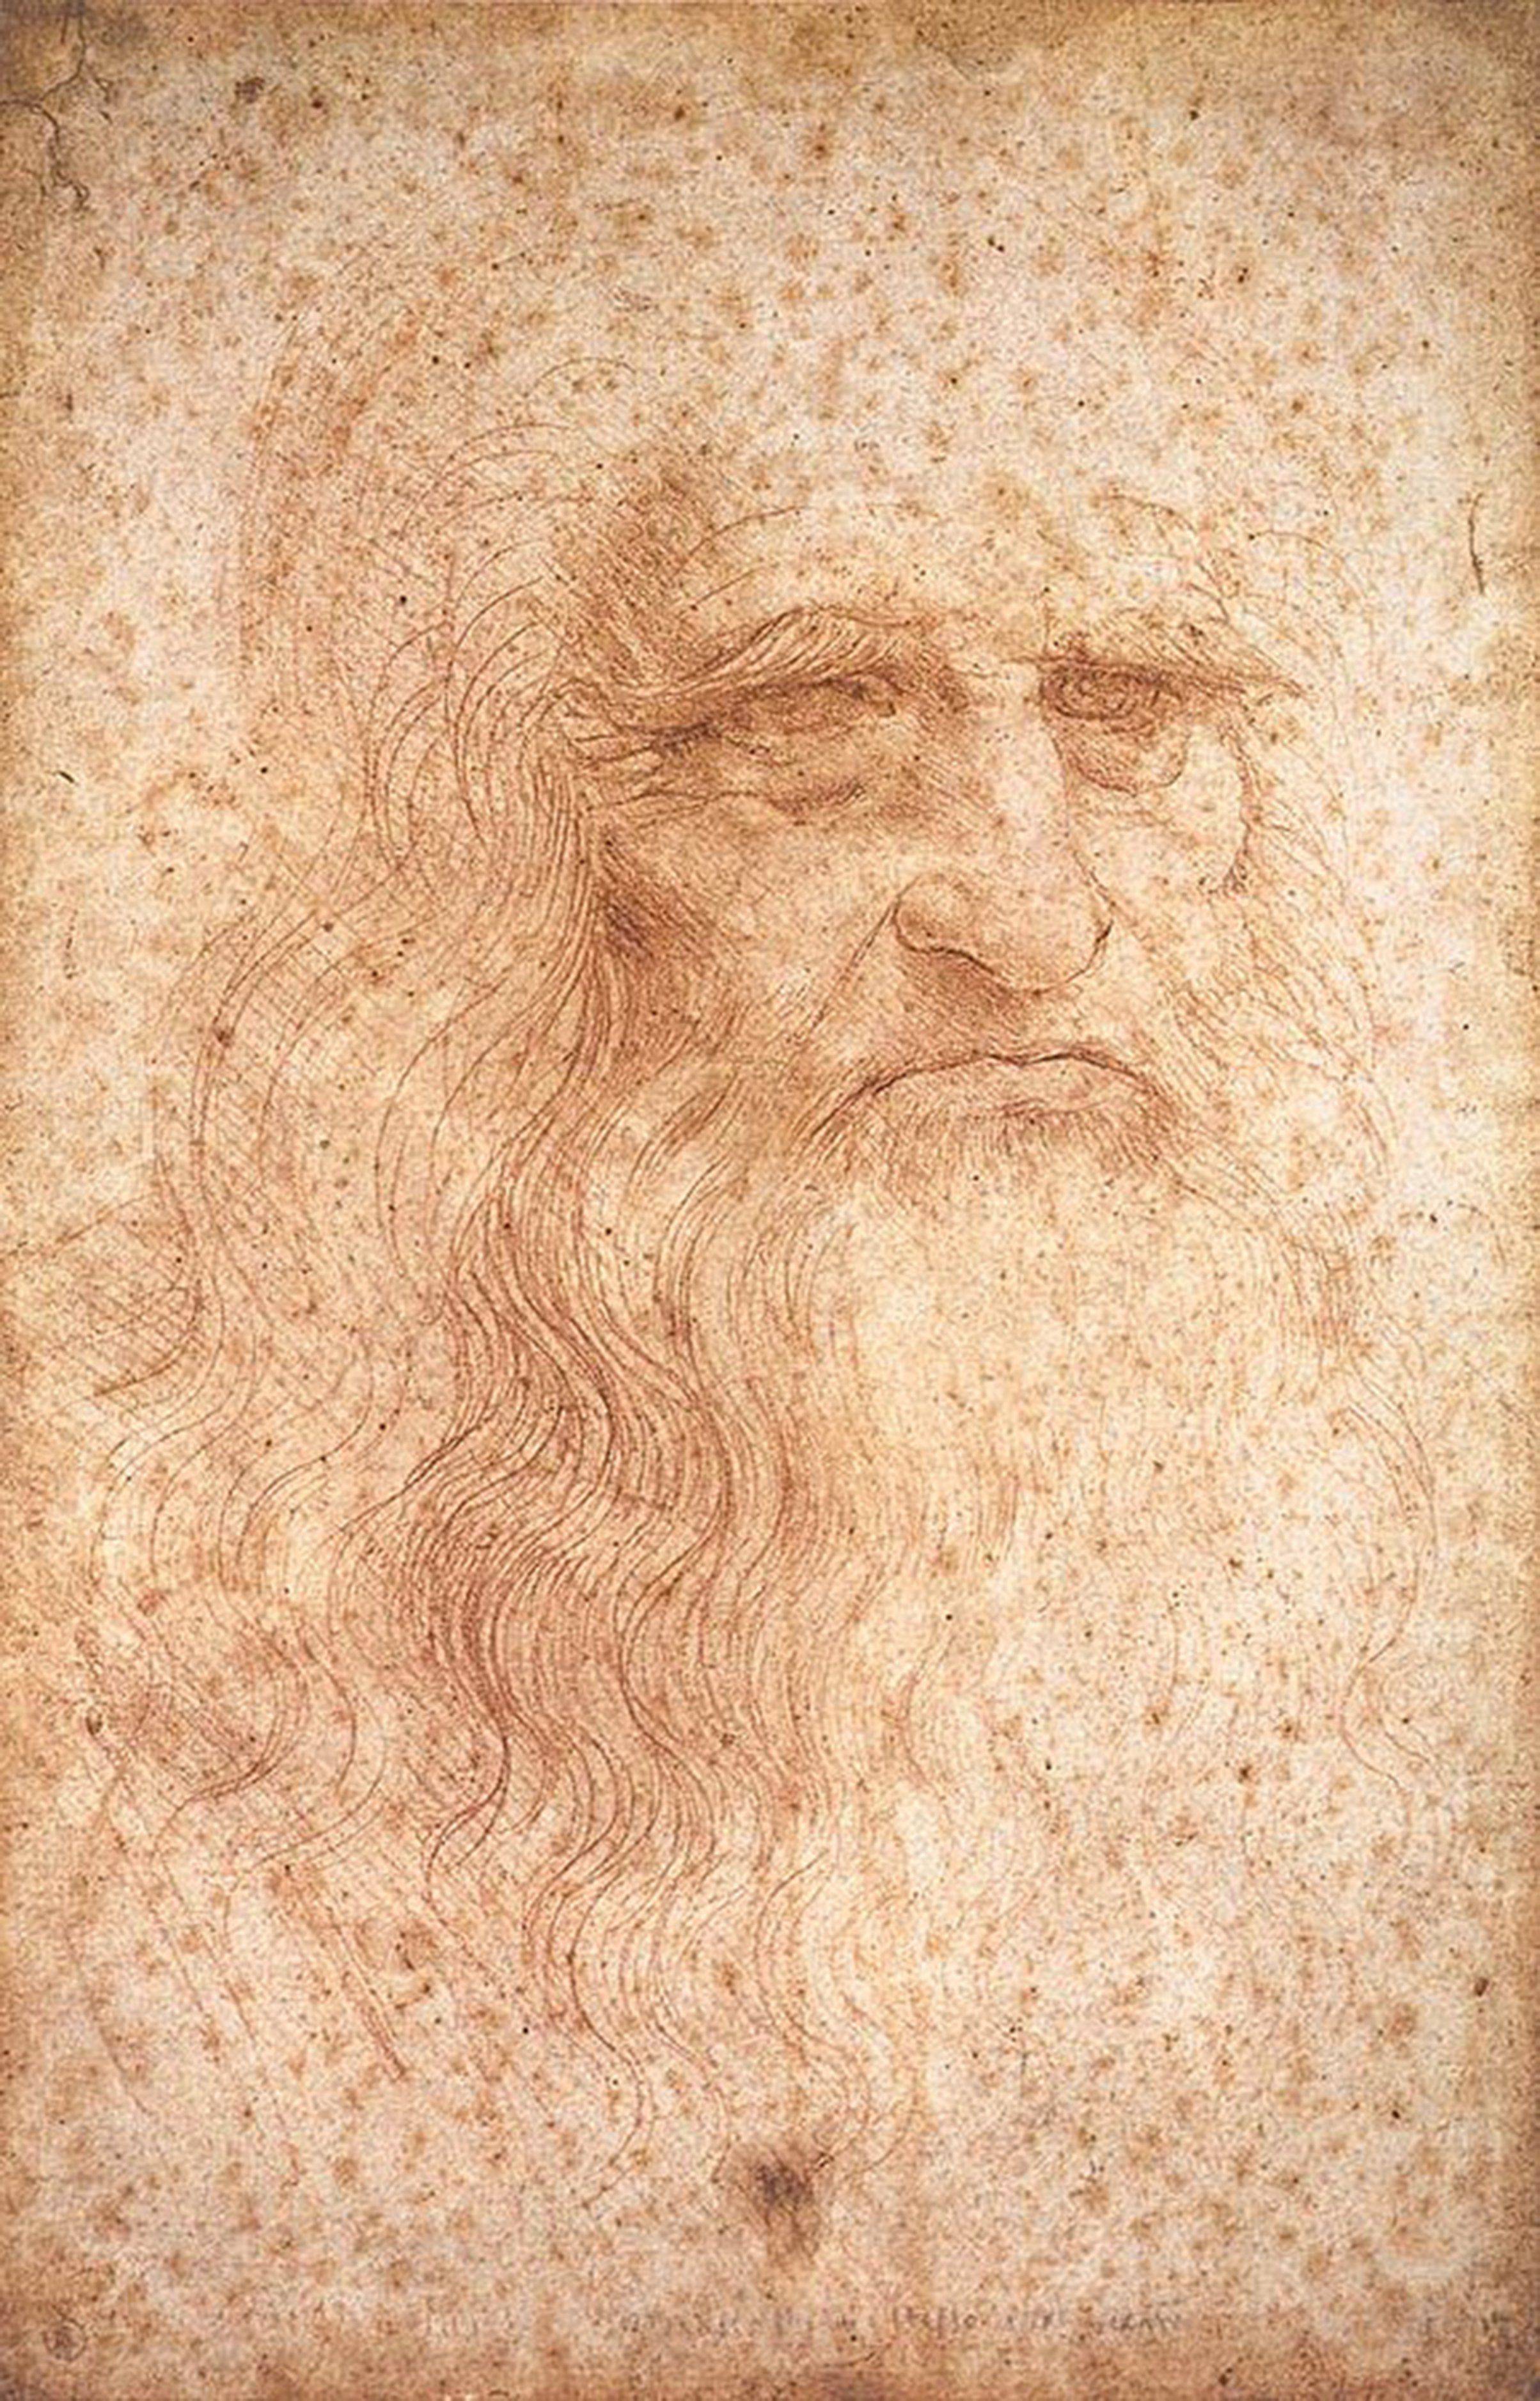 Leonardo da Vinci, Public domain, via Wikimedia Commons